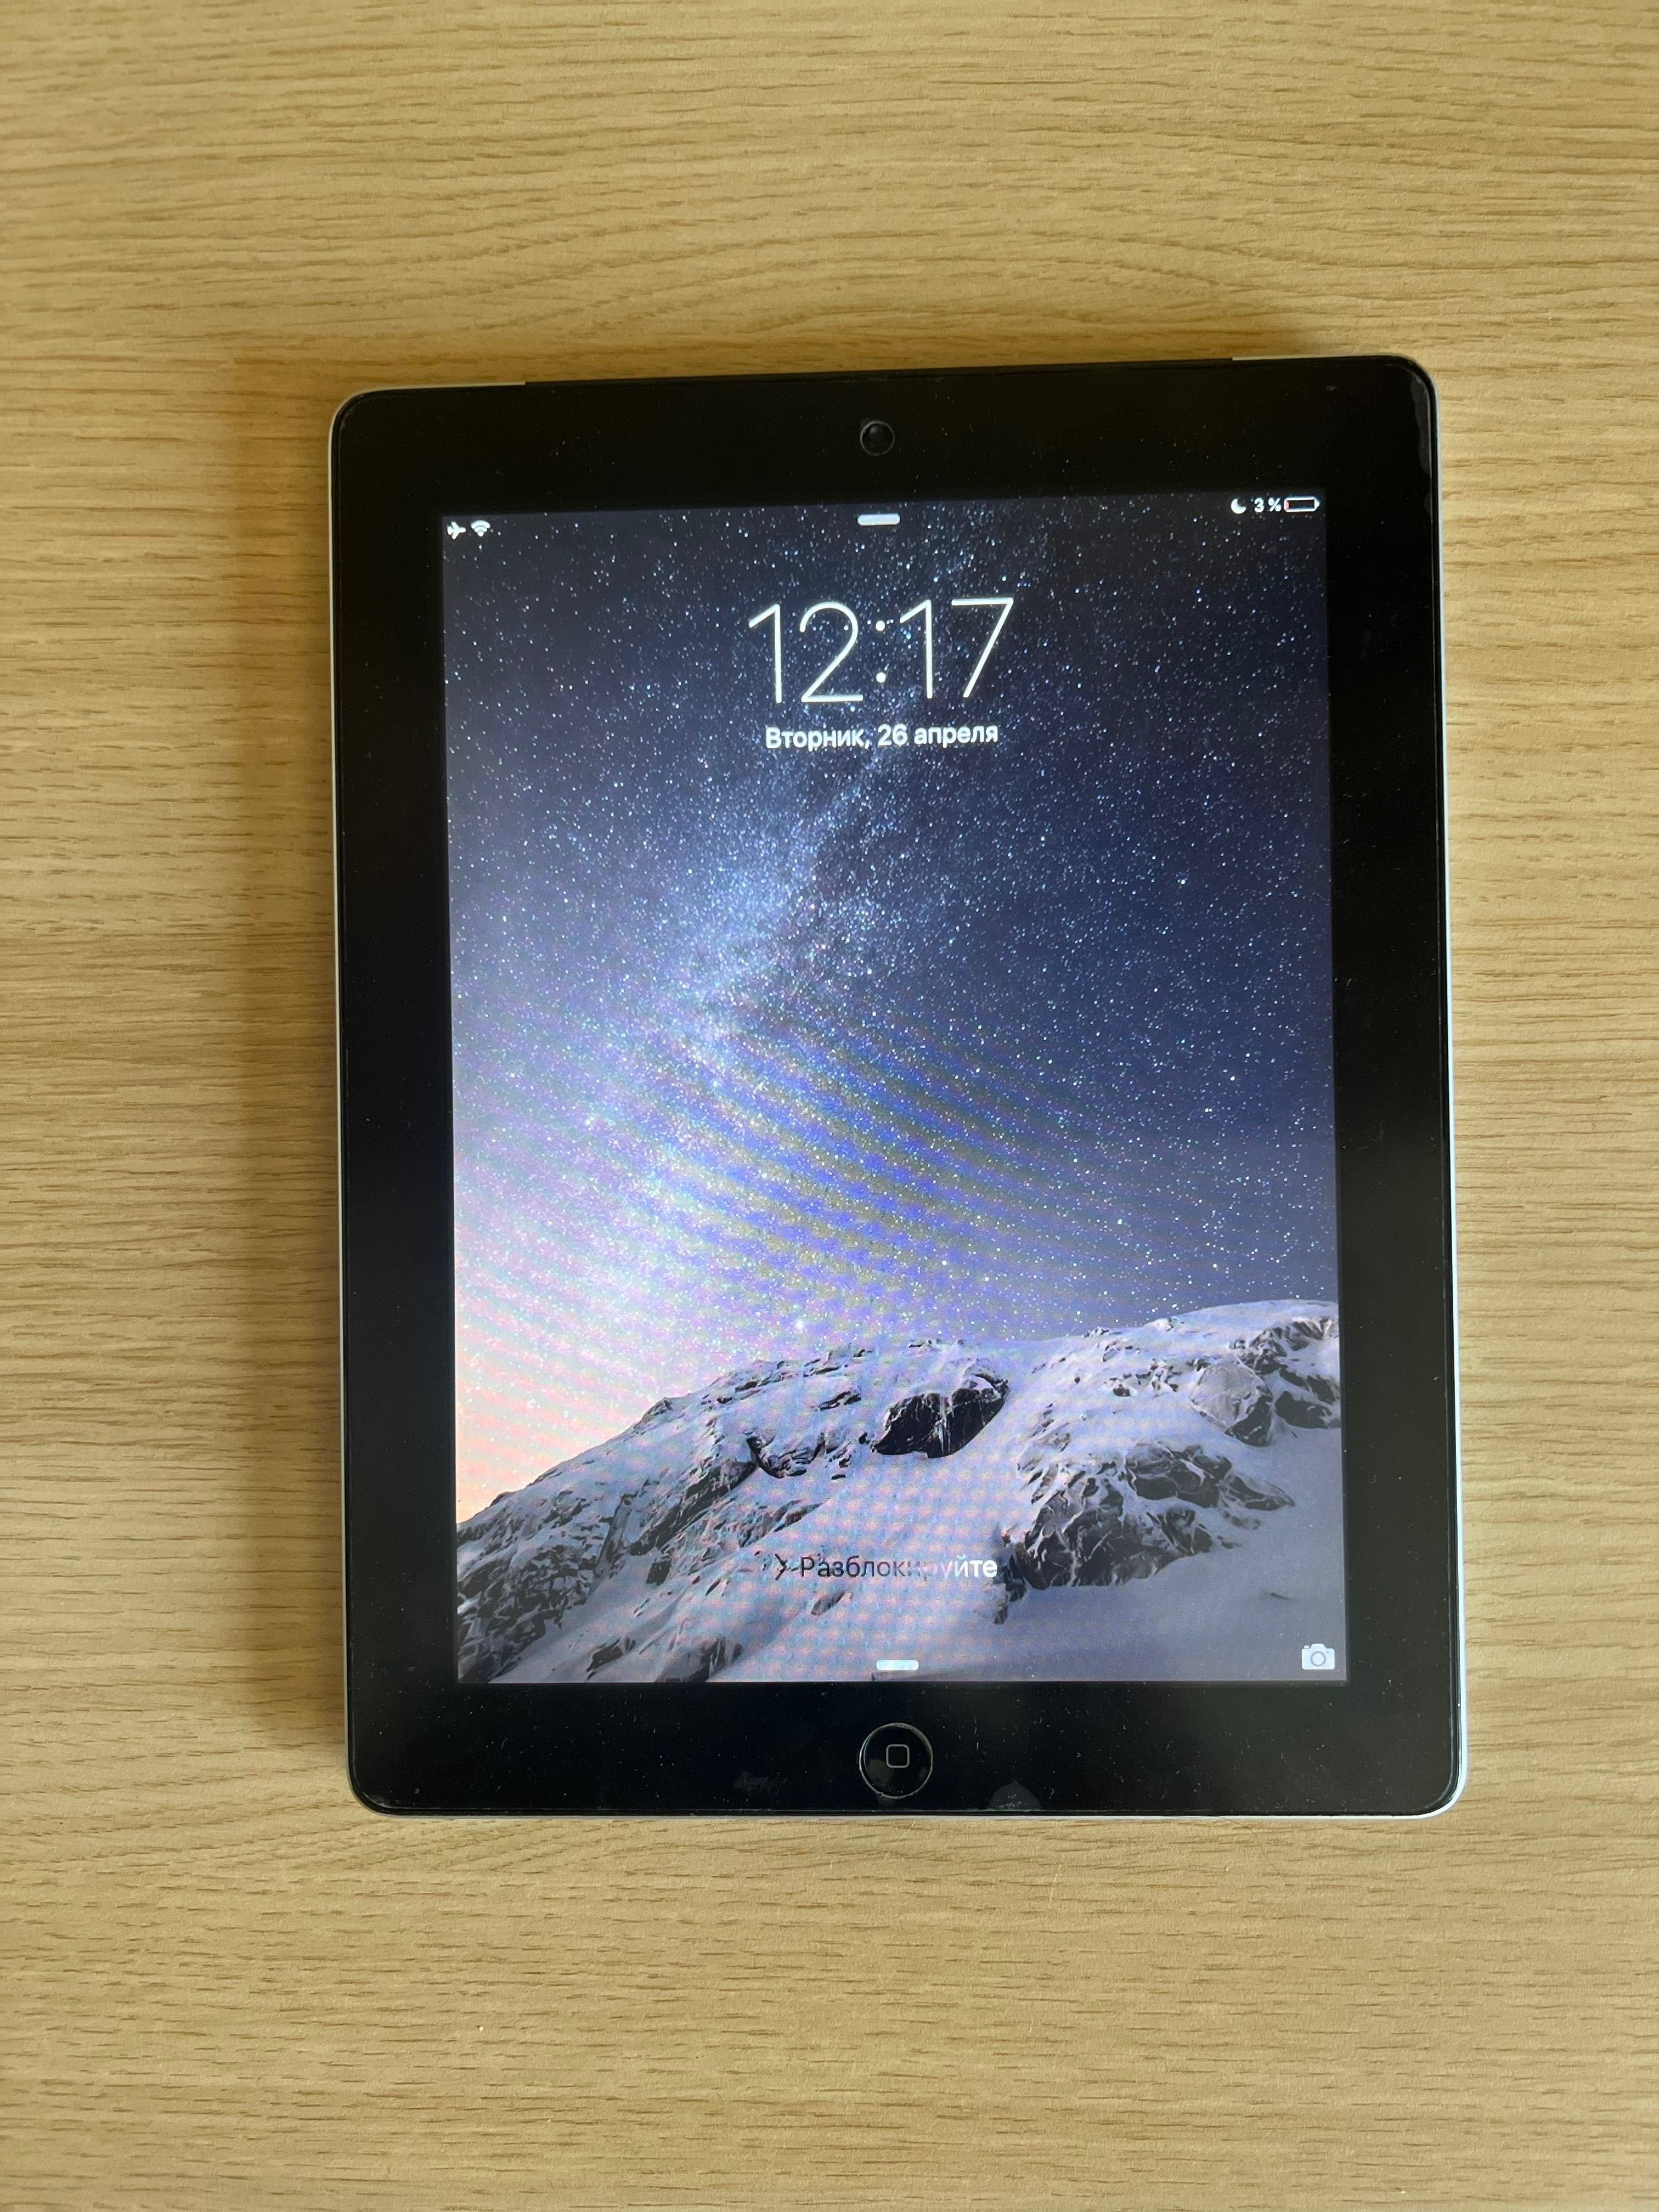 Apple iPad 2 (2011) 64GB WiFi + Cellular A1396